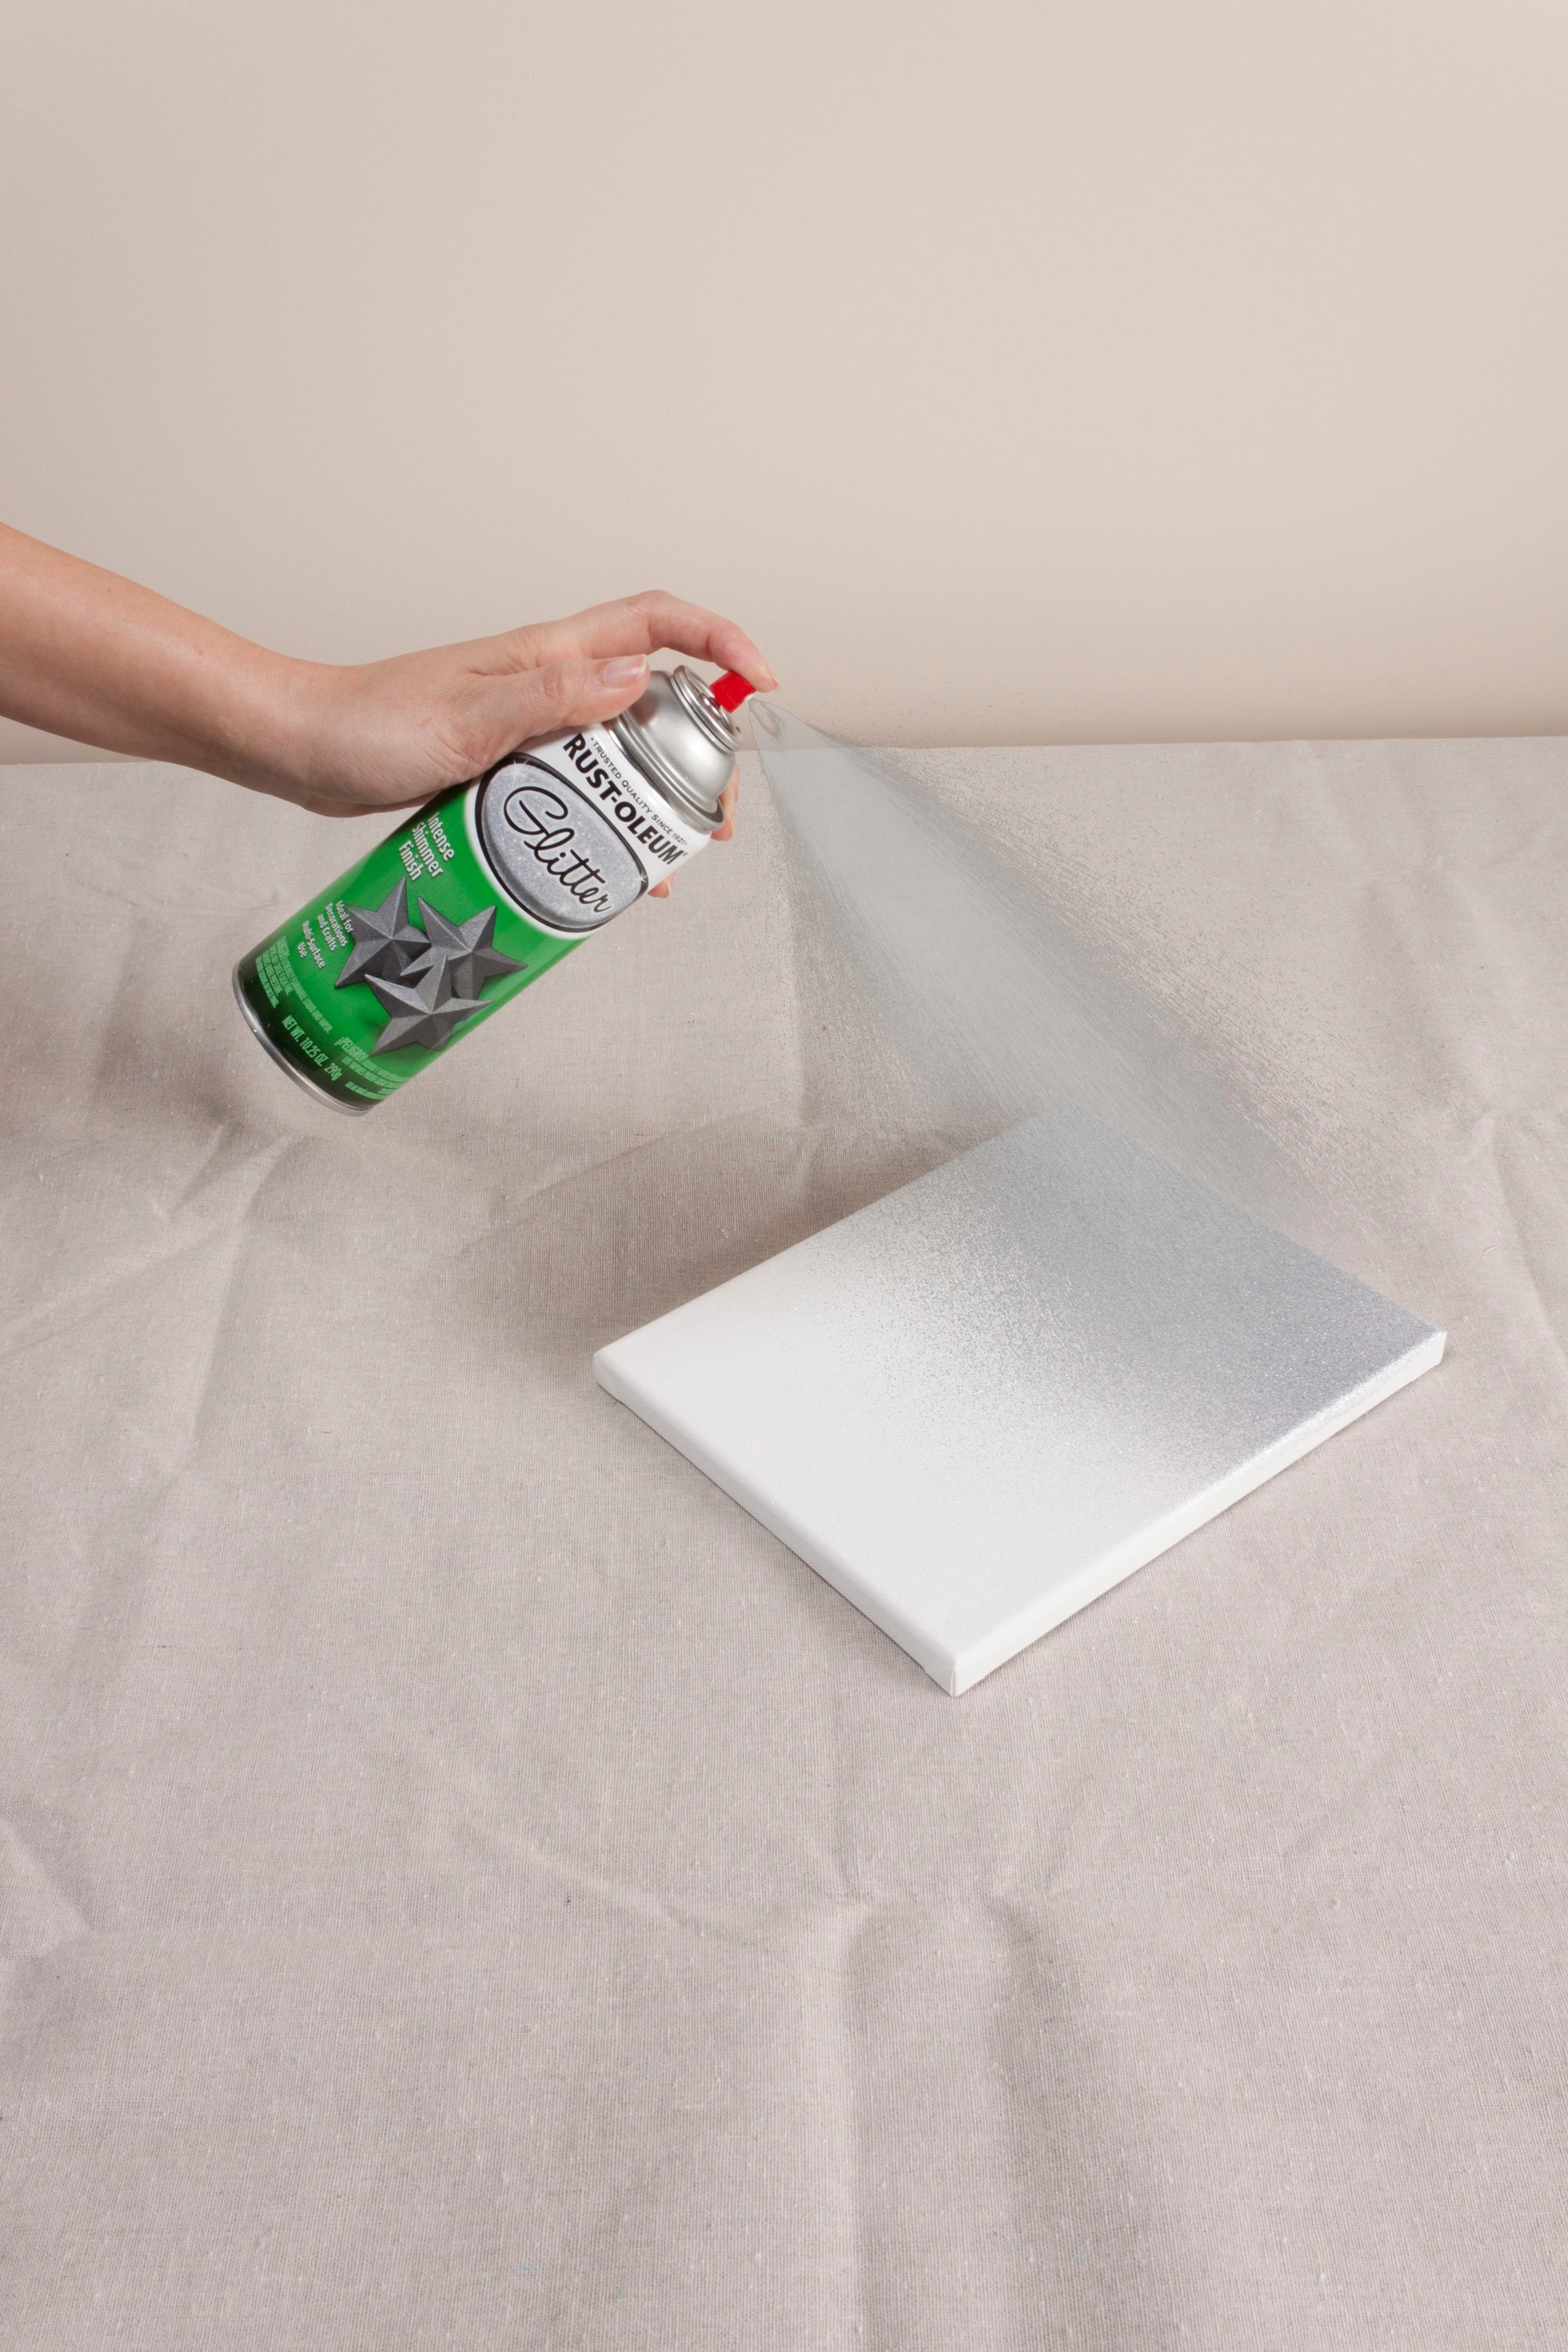 Rust-Oleum® Glitter Spray Paint